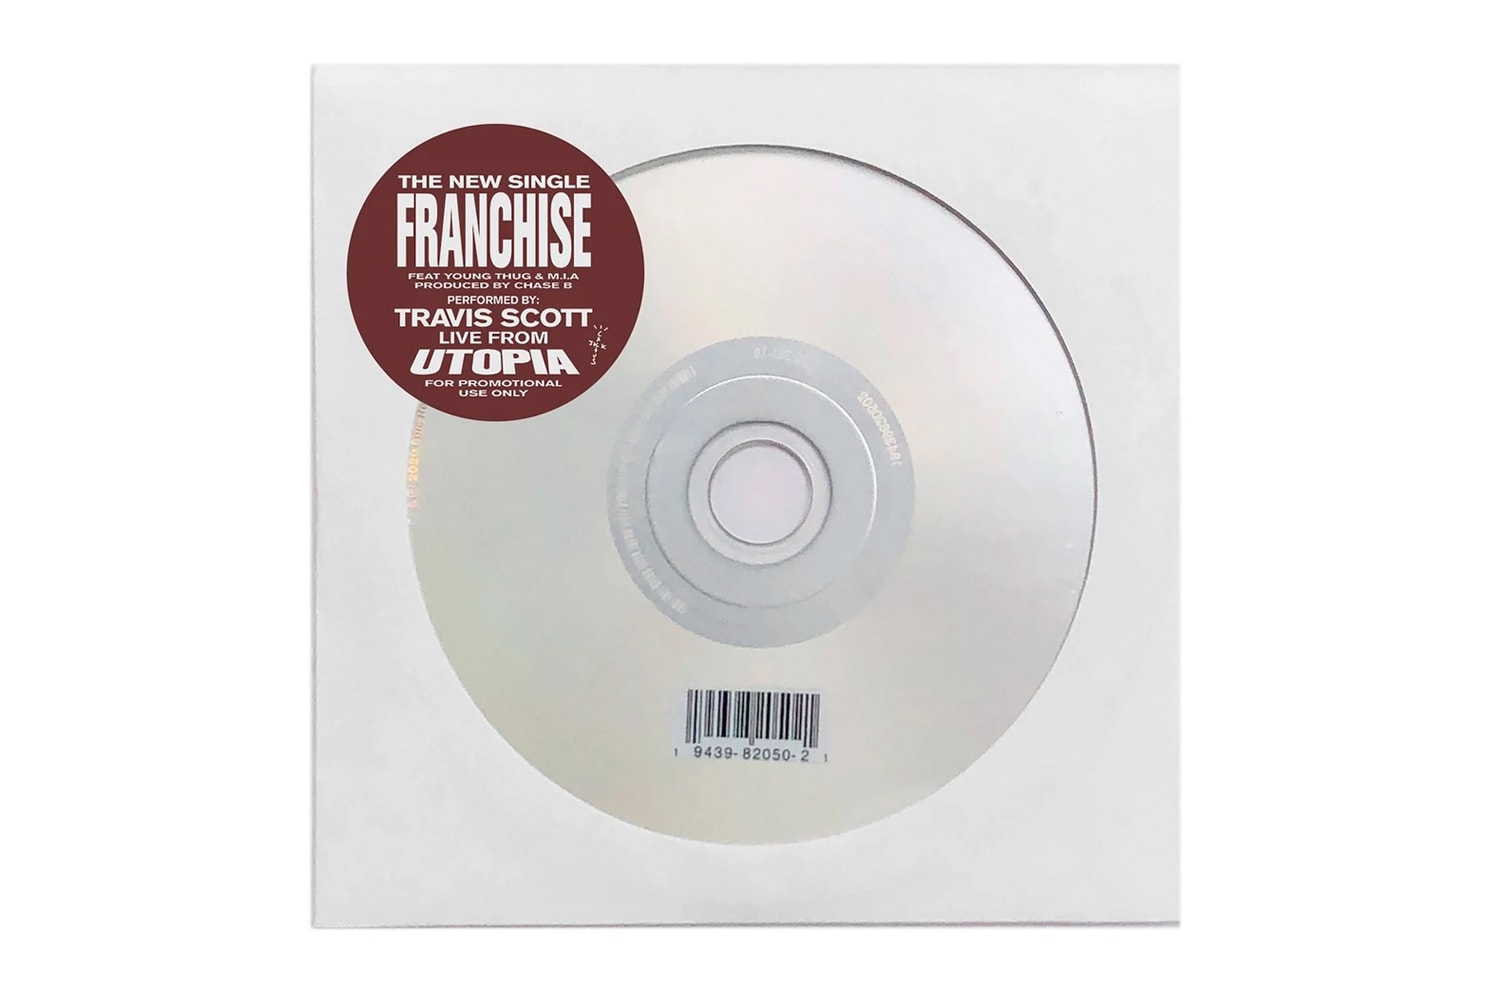 Travis Scott FRANCHISE PROMO TEES CD Release Info Buy Price Utopia